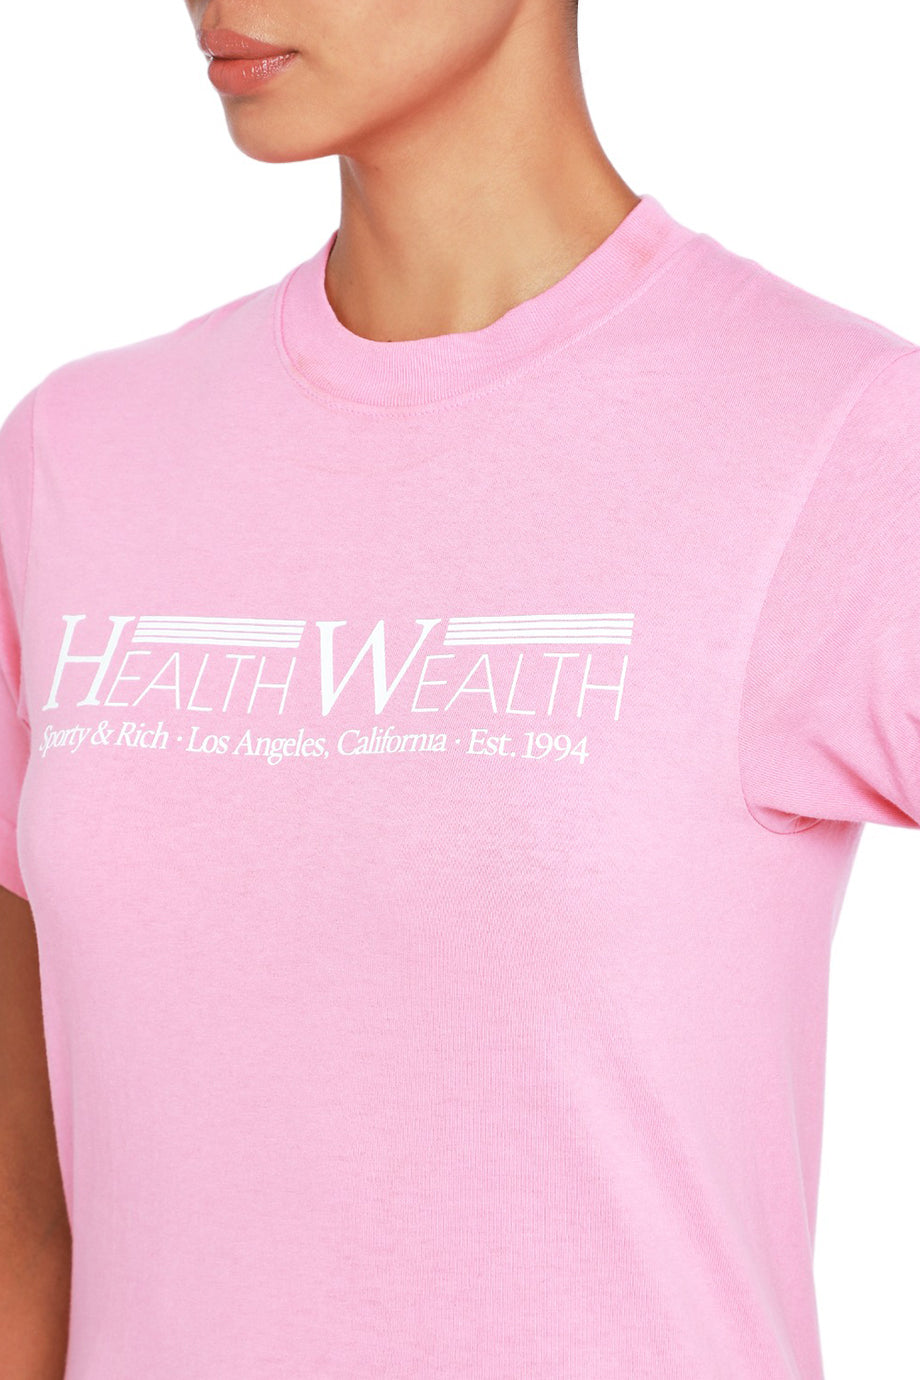 Health Wealth 94 T-Shirt